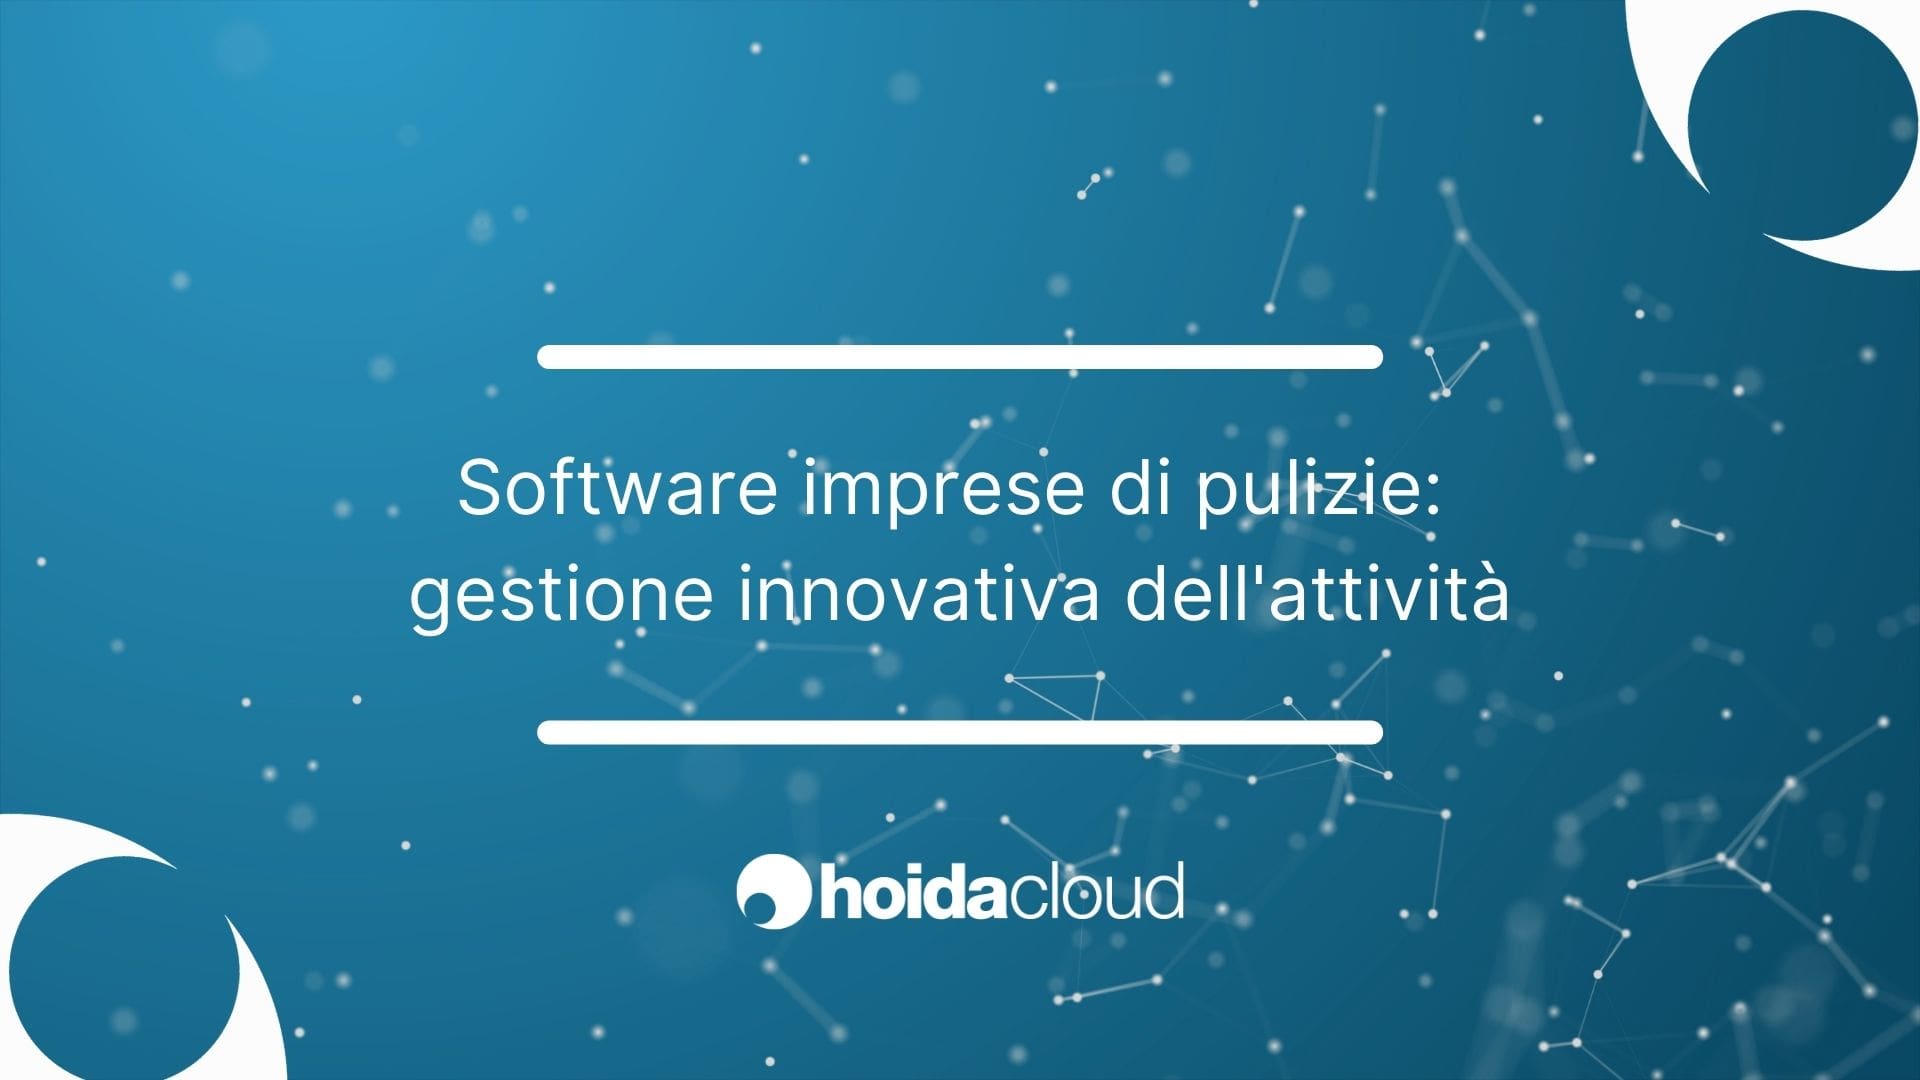 software-imprese-hoida-new